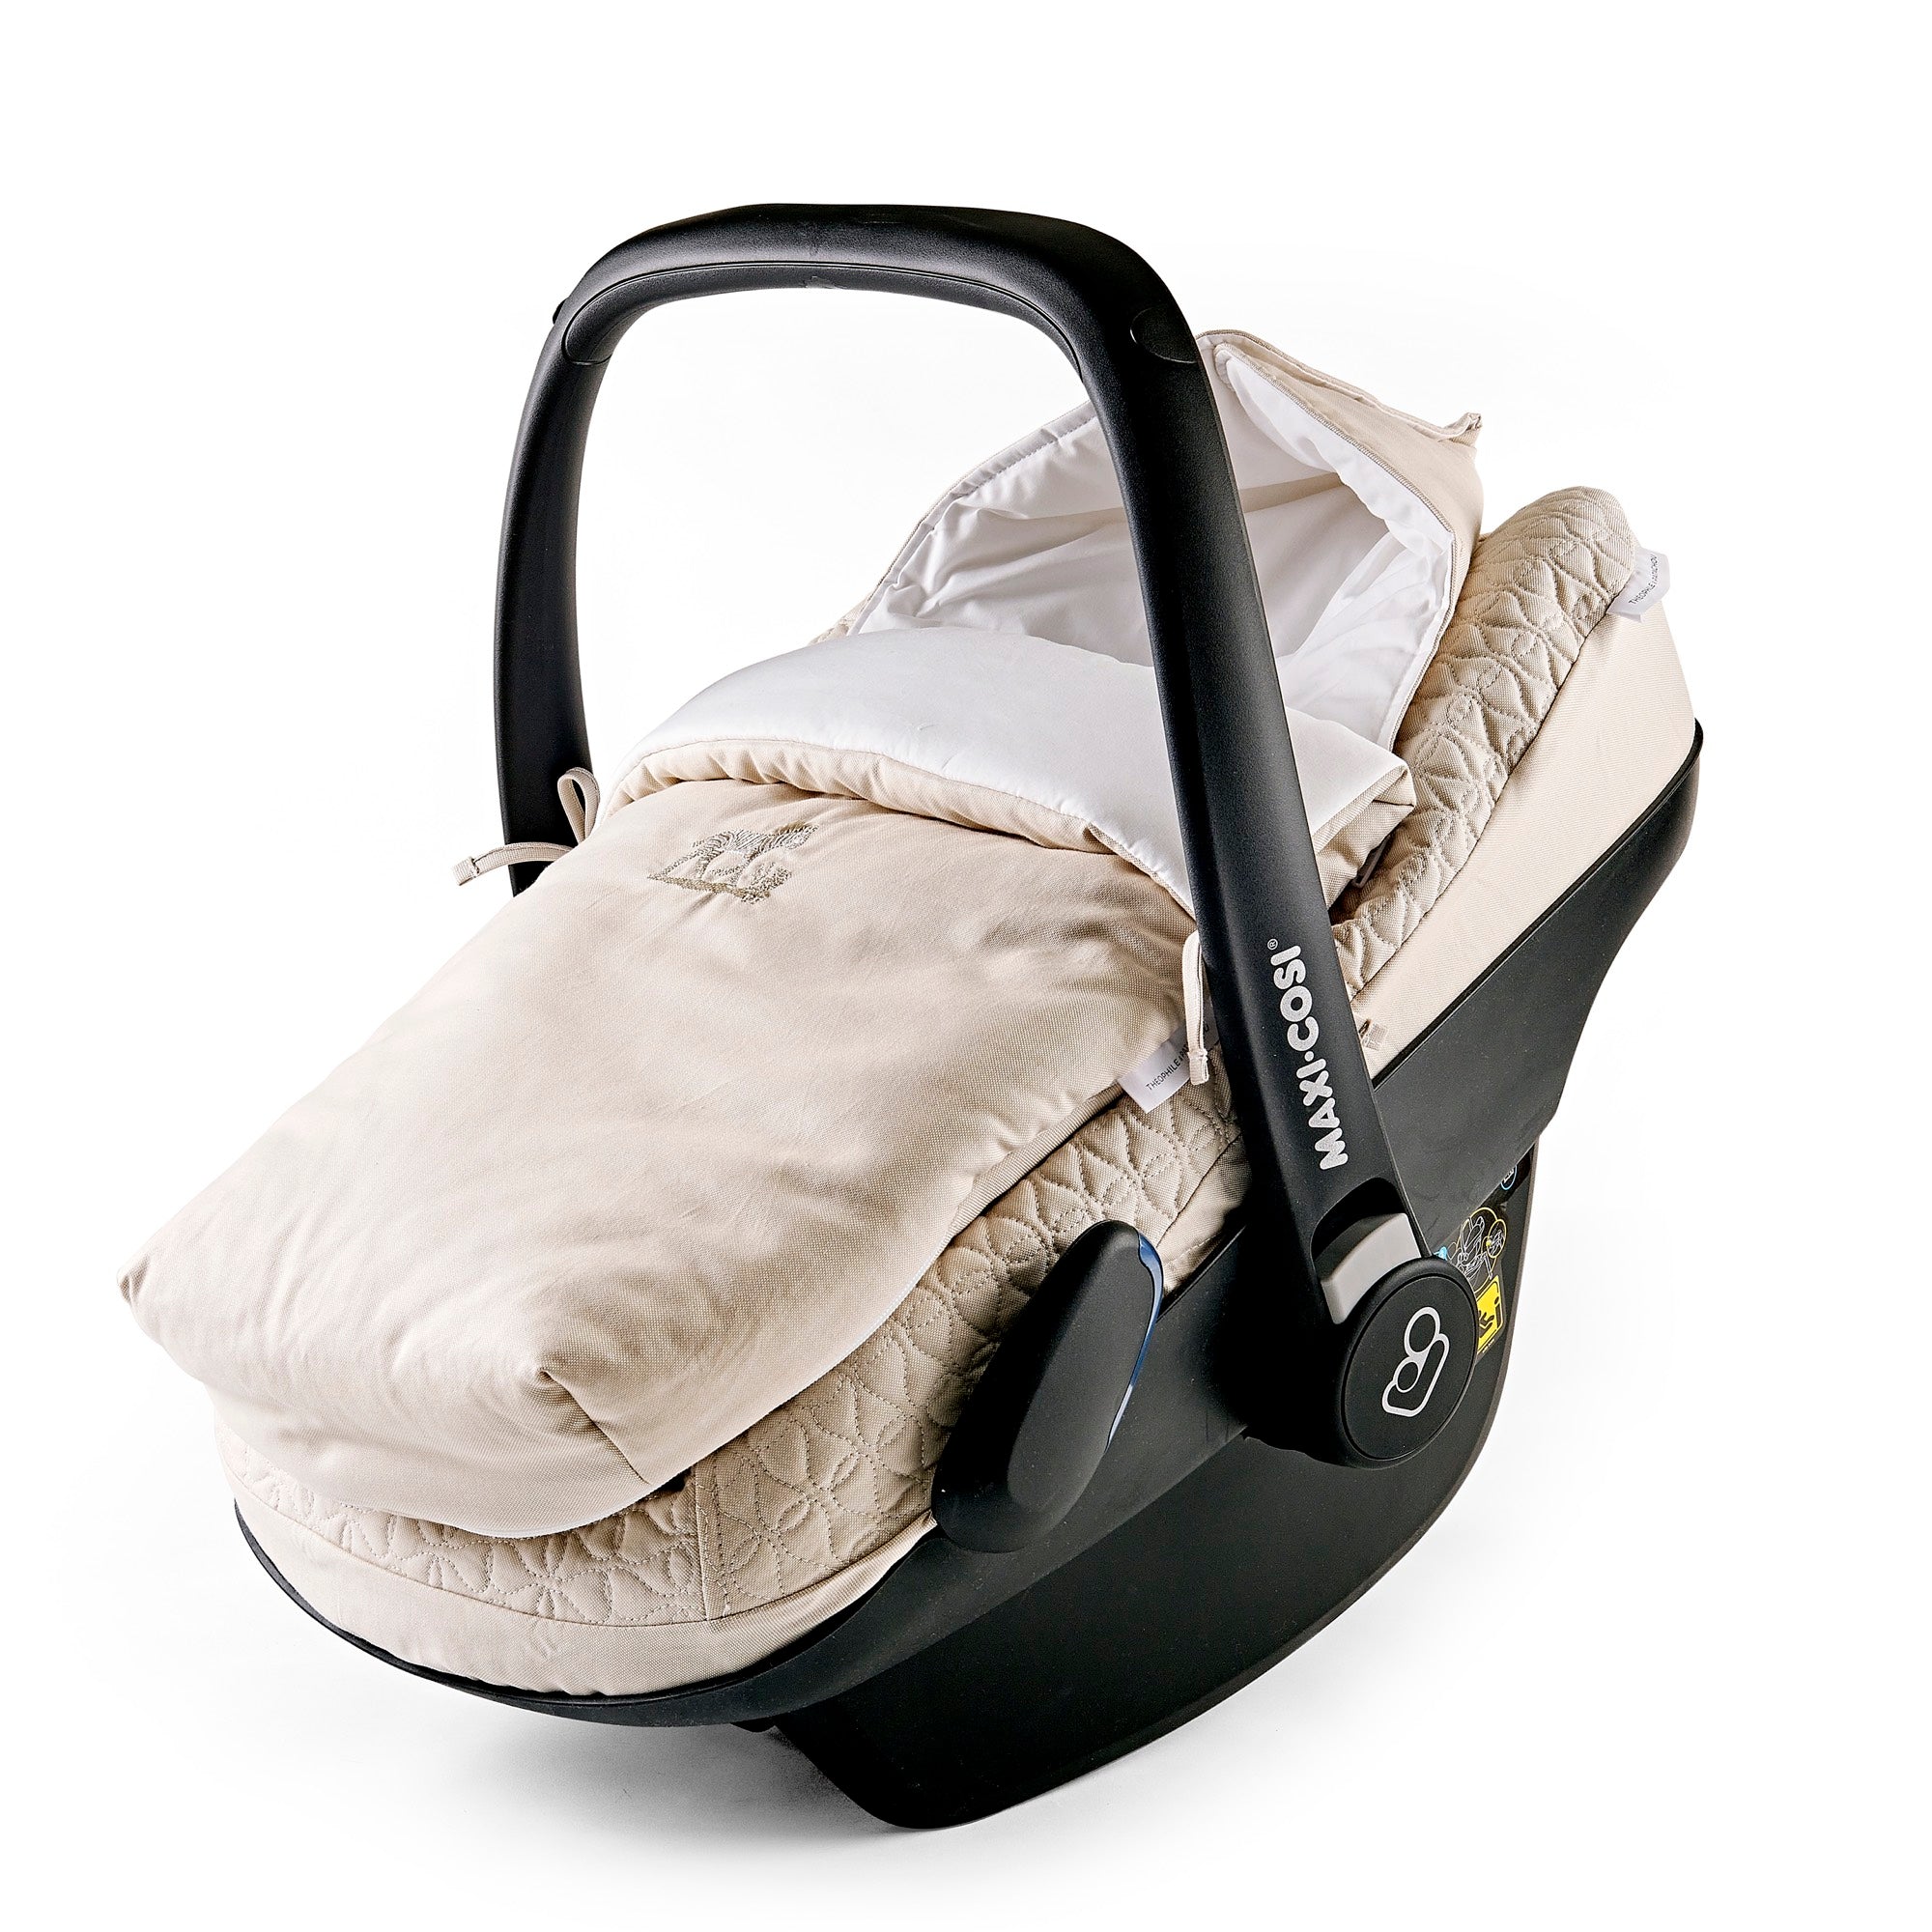 Theophile & Patachou Hooded sleeping bag “Pebble pro” - Safari